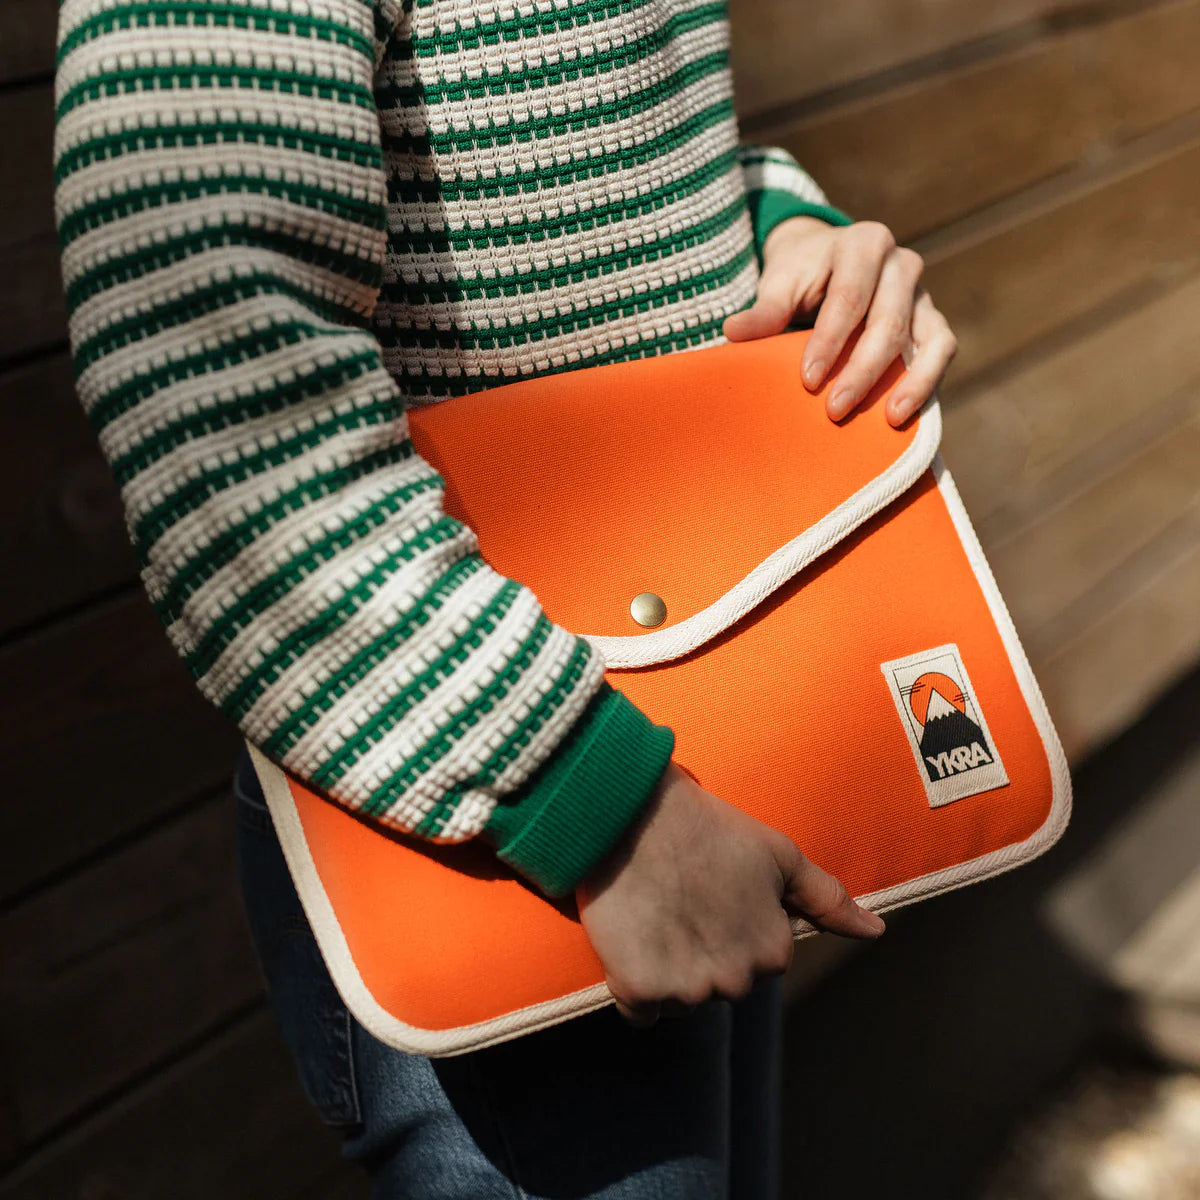 ykra laptop case medium - orange